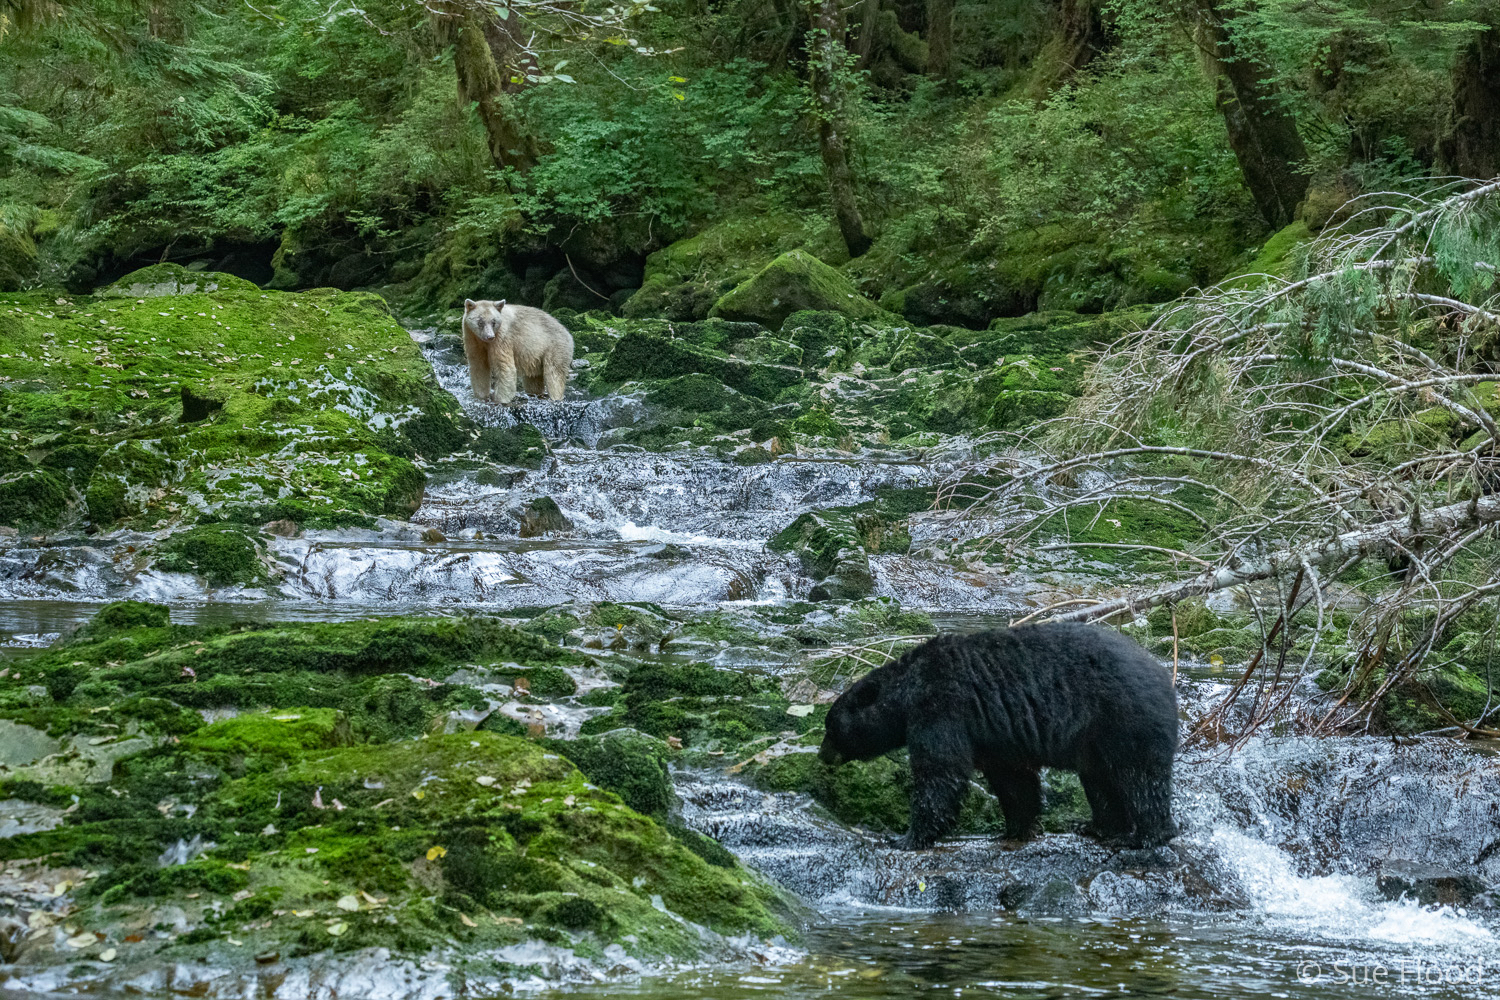 Black bear and spirit bear in river, Great Bear Rainforest, British Columbia, Canada.